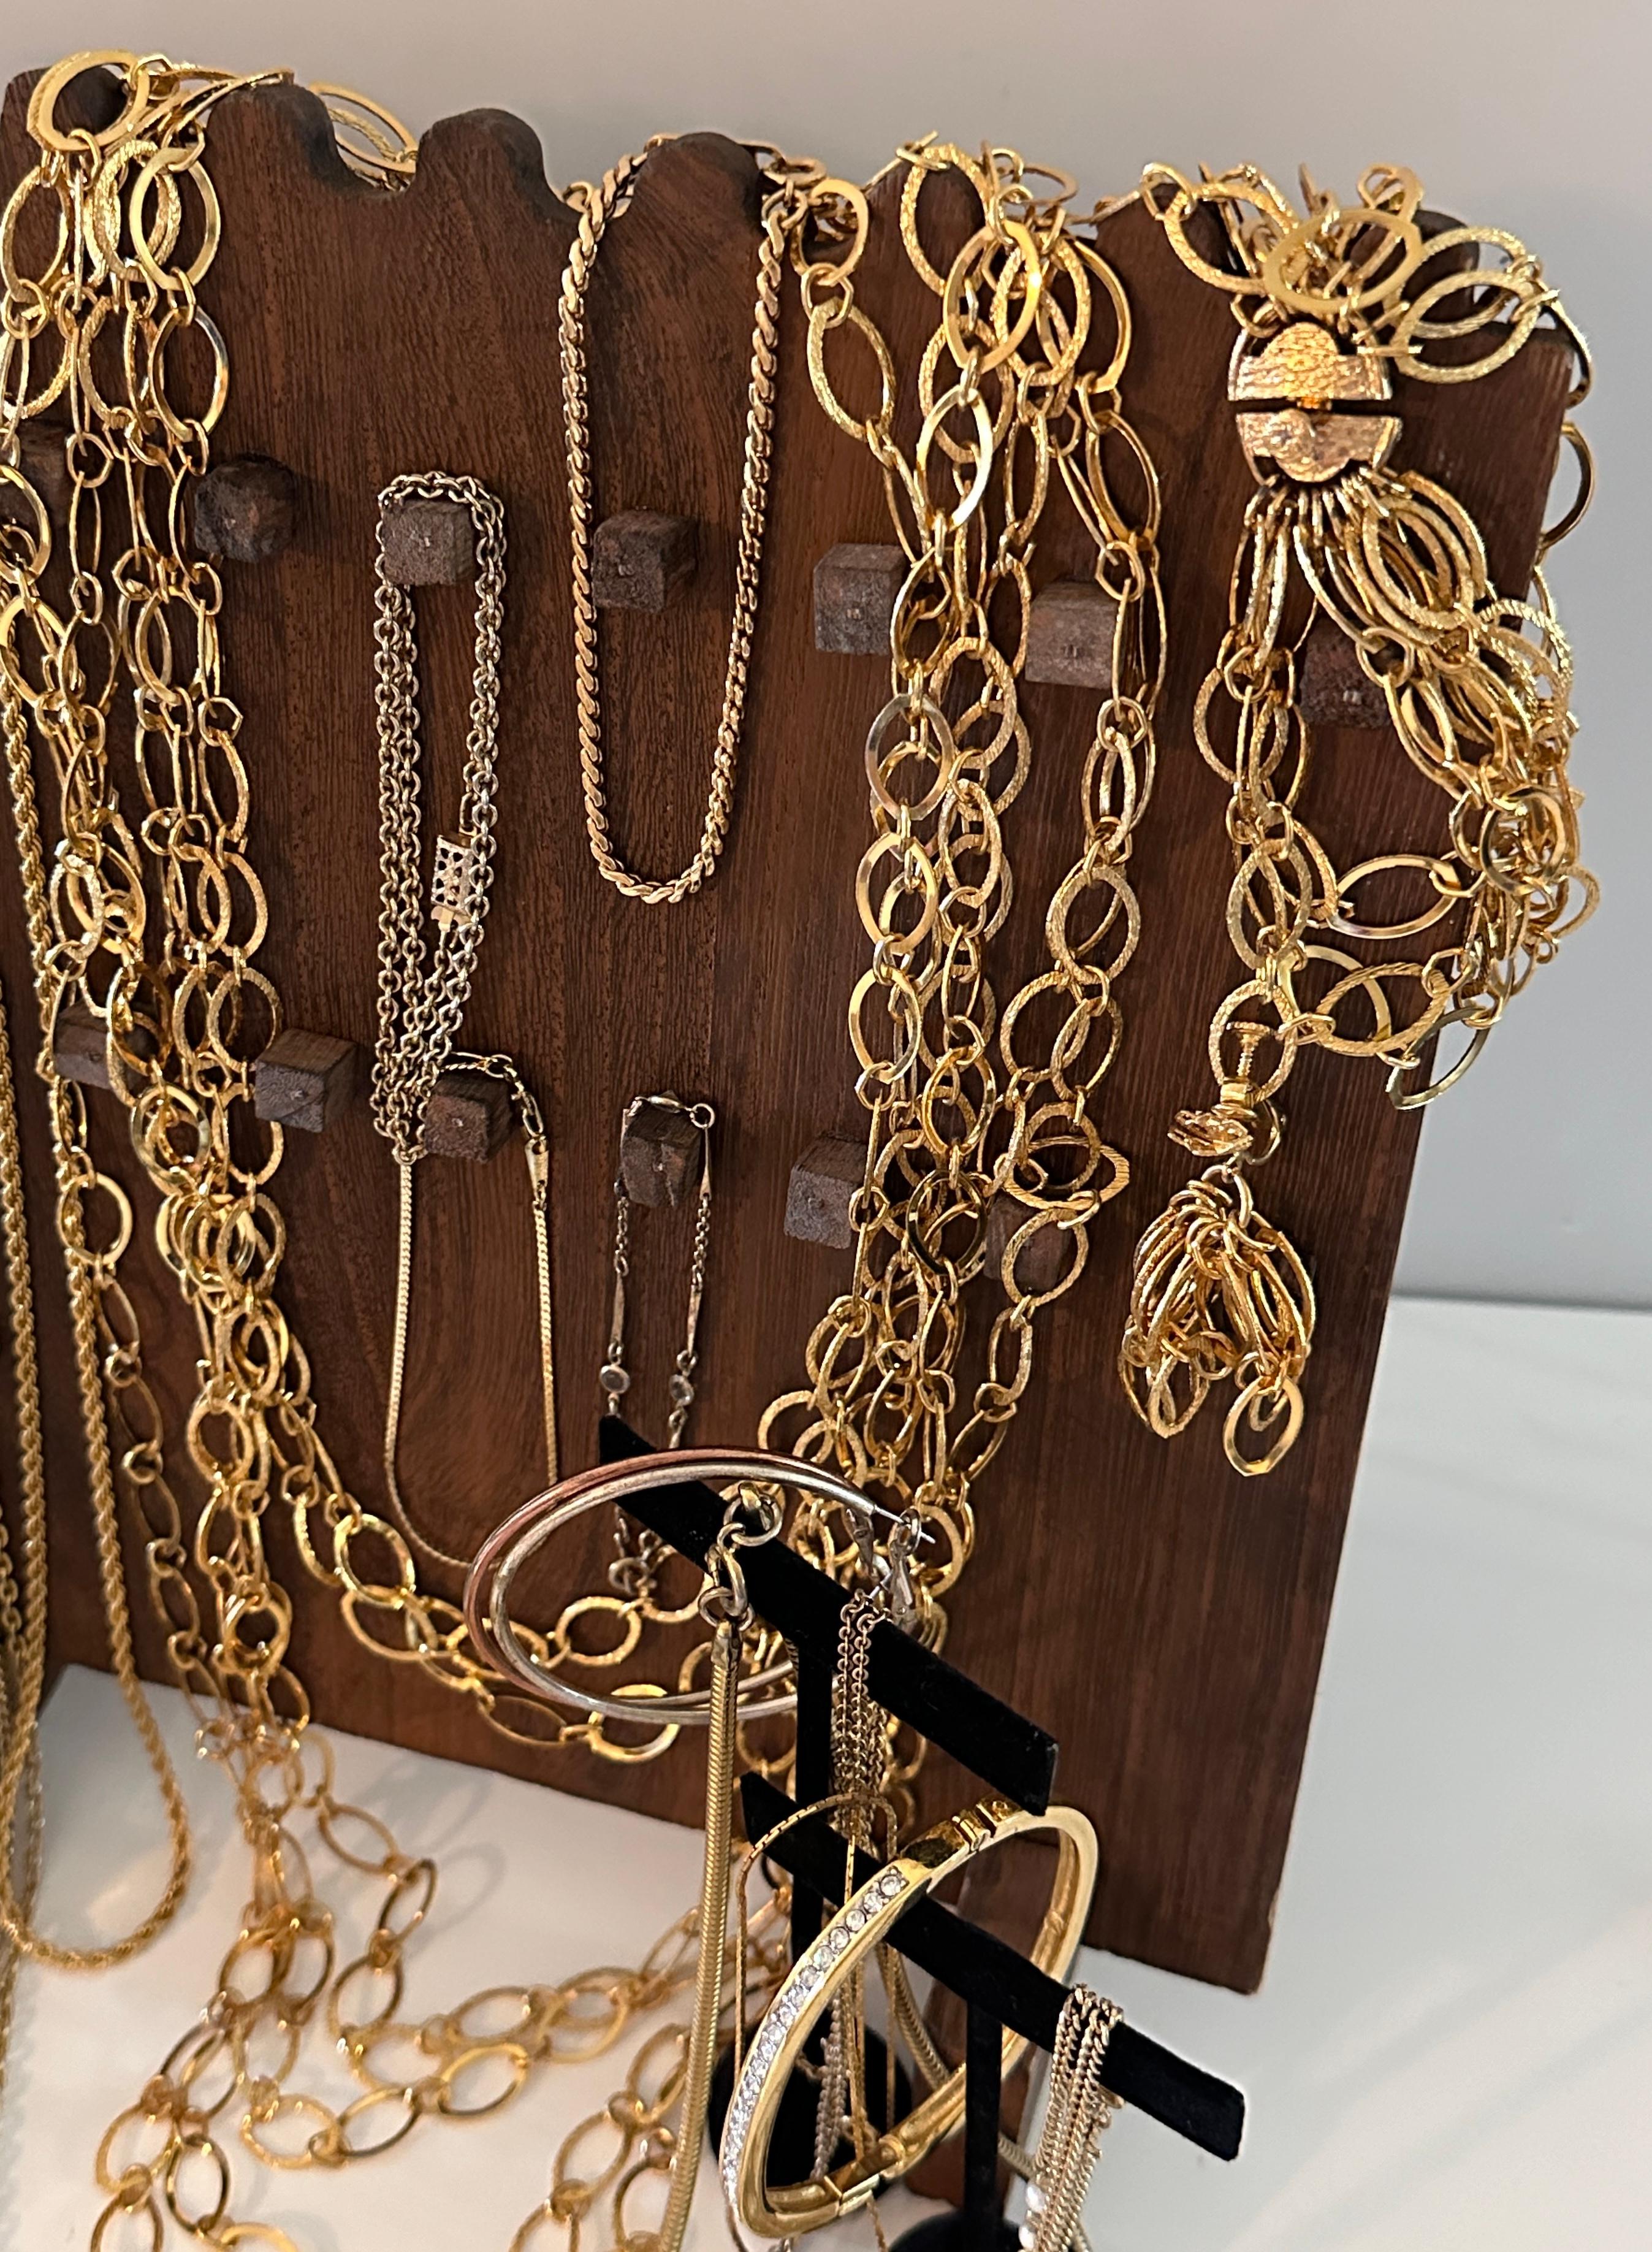 Gold Tone Fashion Jewelry Assortment